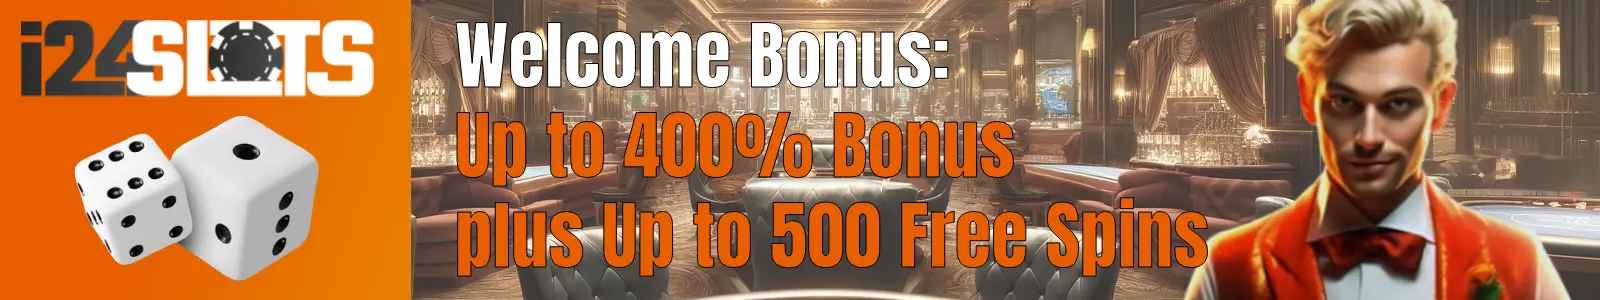 i24slots casino welcome bonus package